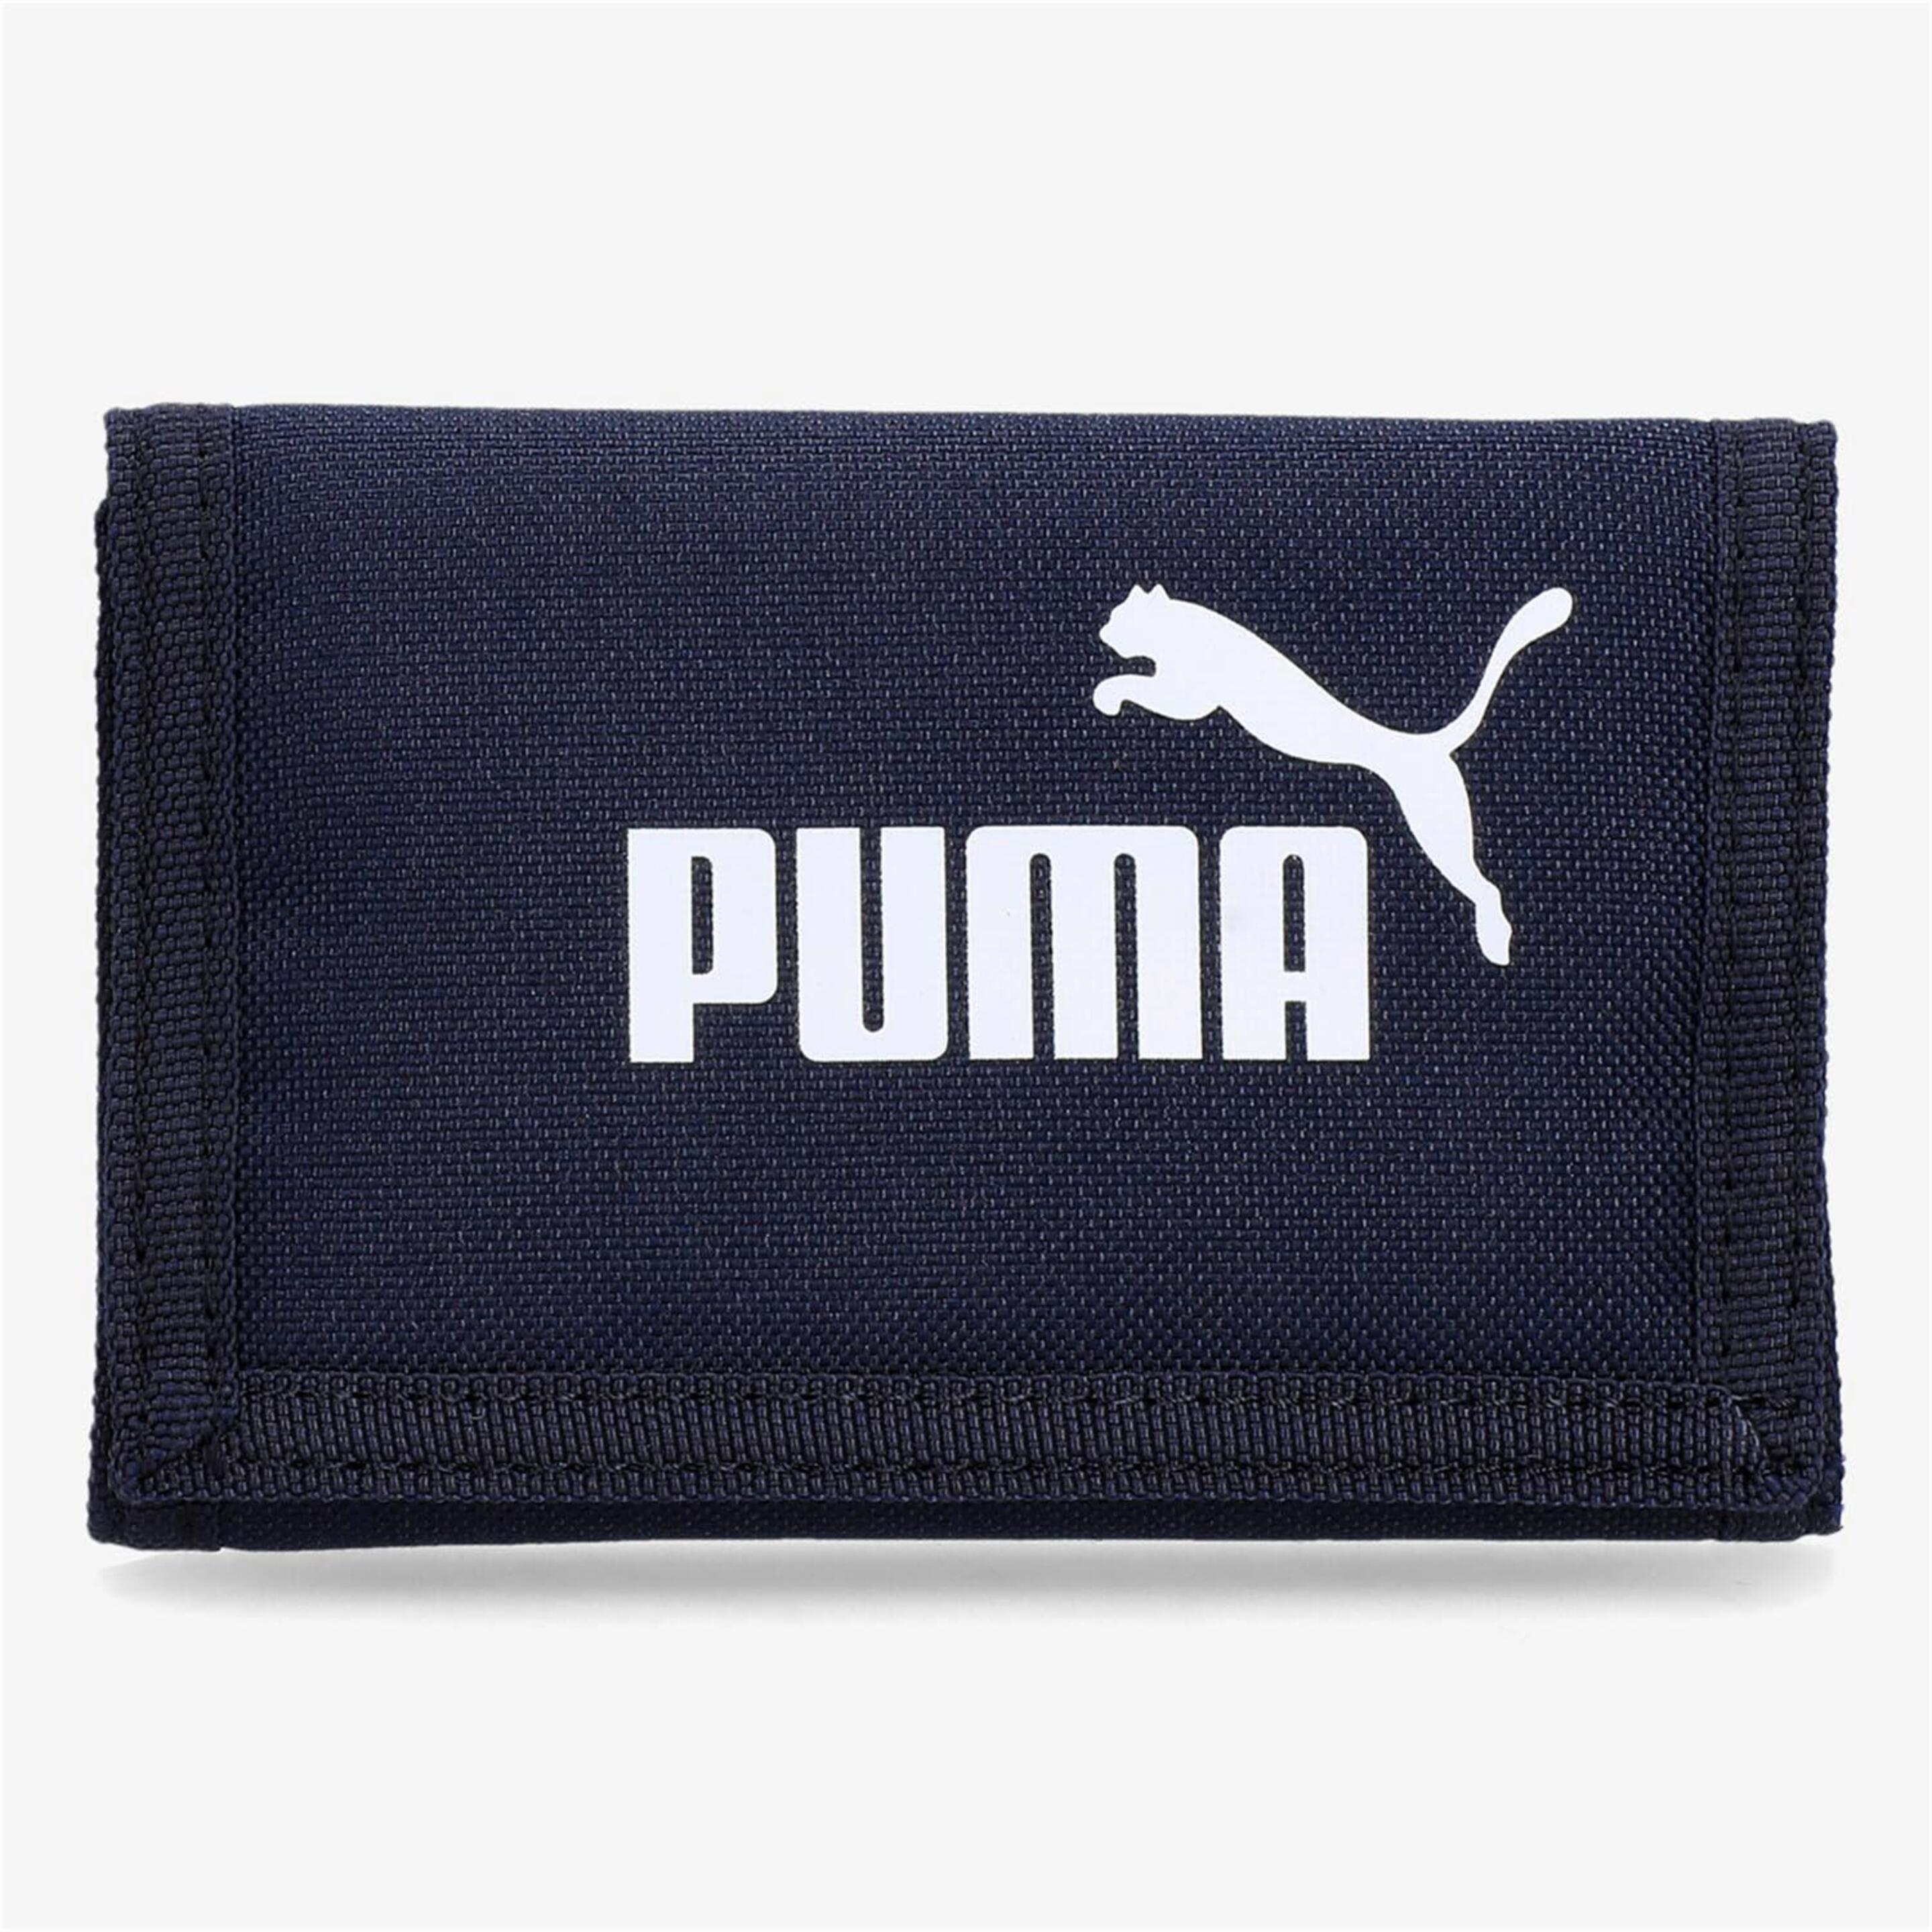 Puma Phase - Marino - Billetero Unisex